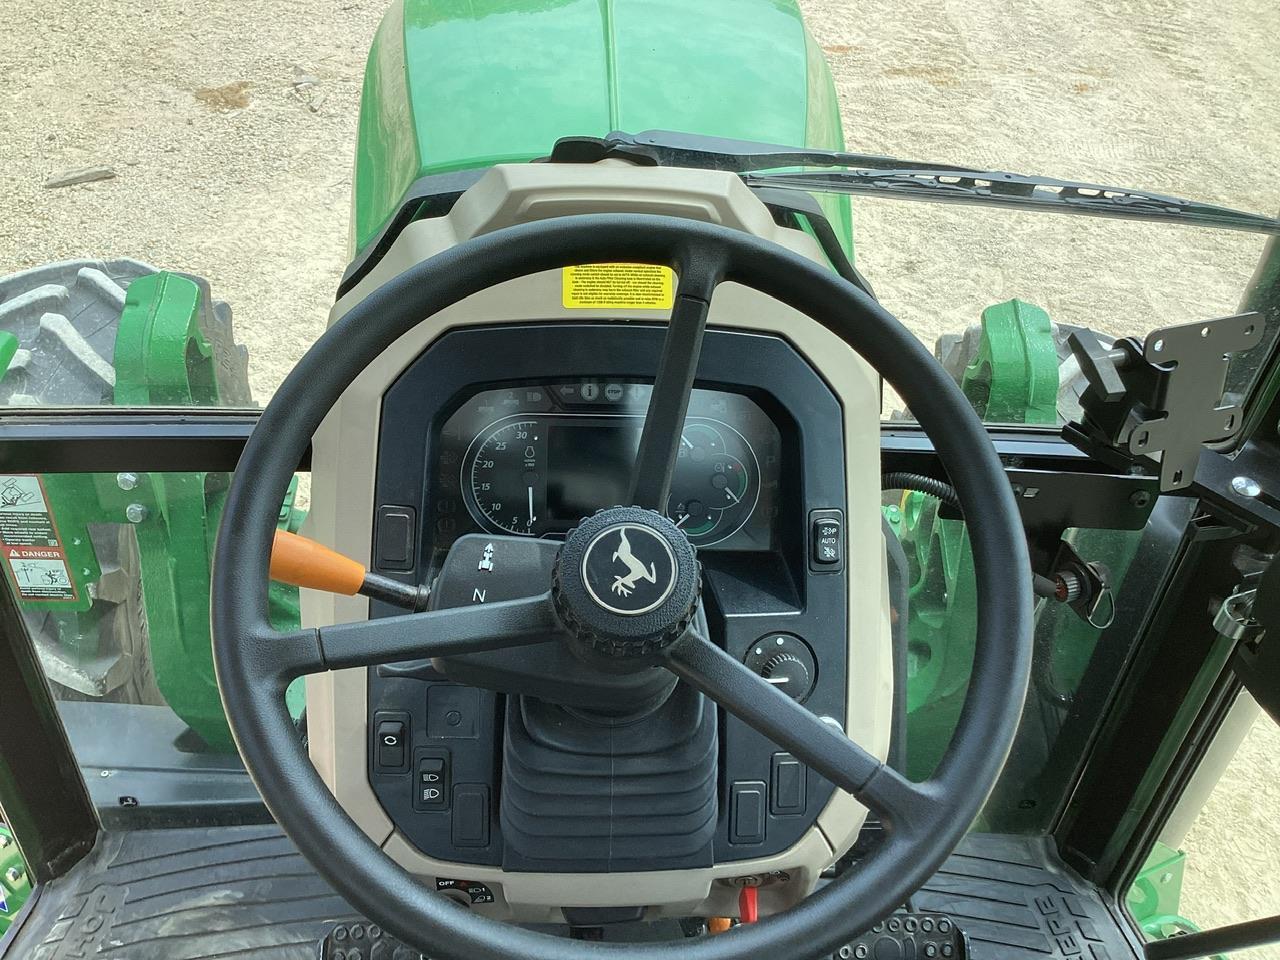 2023 John Deere 6105E Tractor MFWD Loader Ready